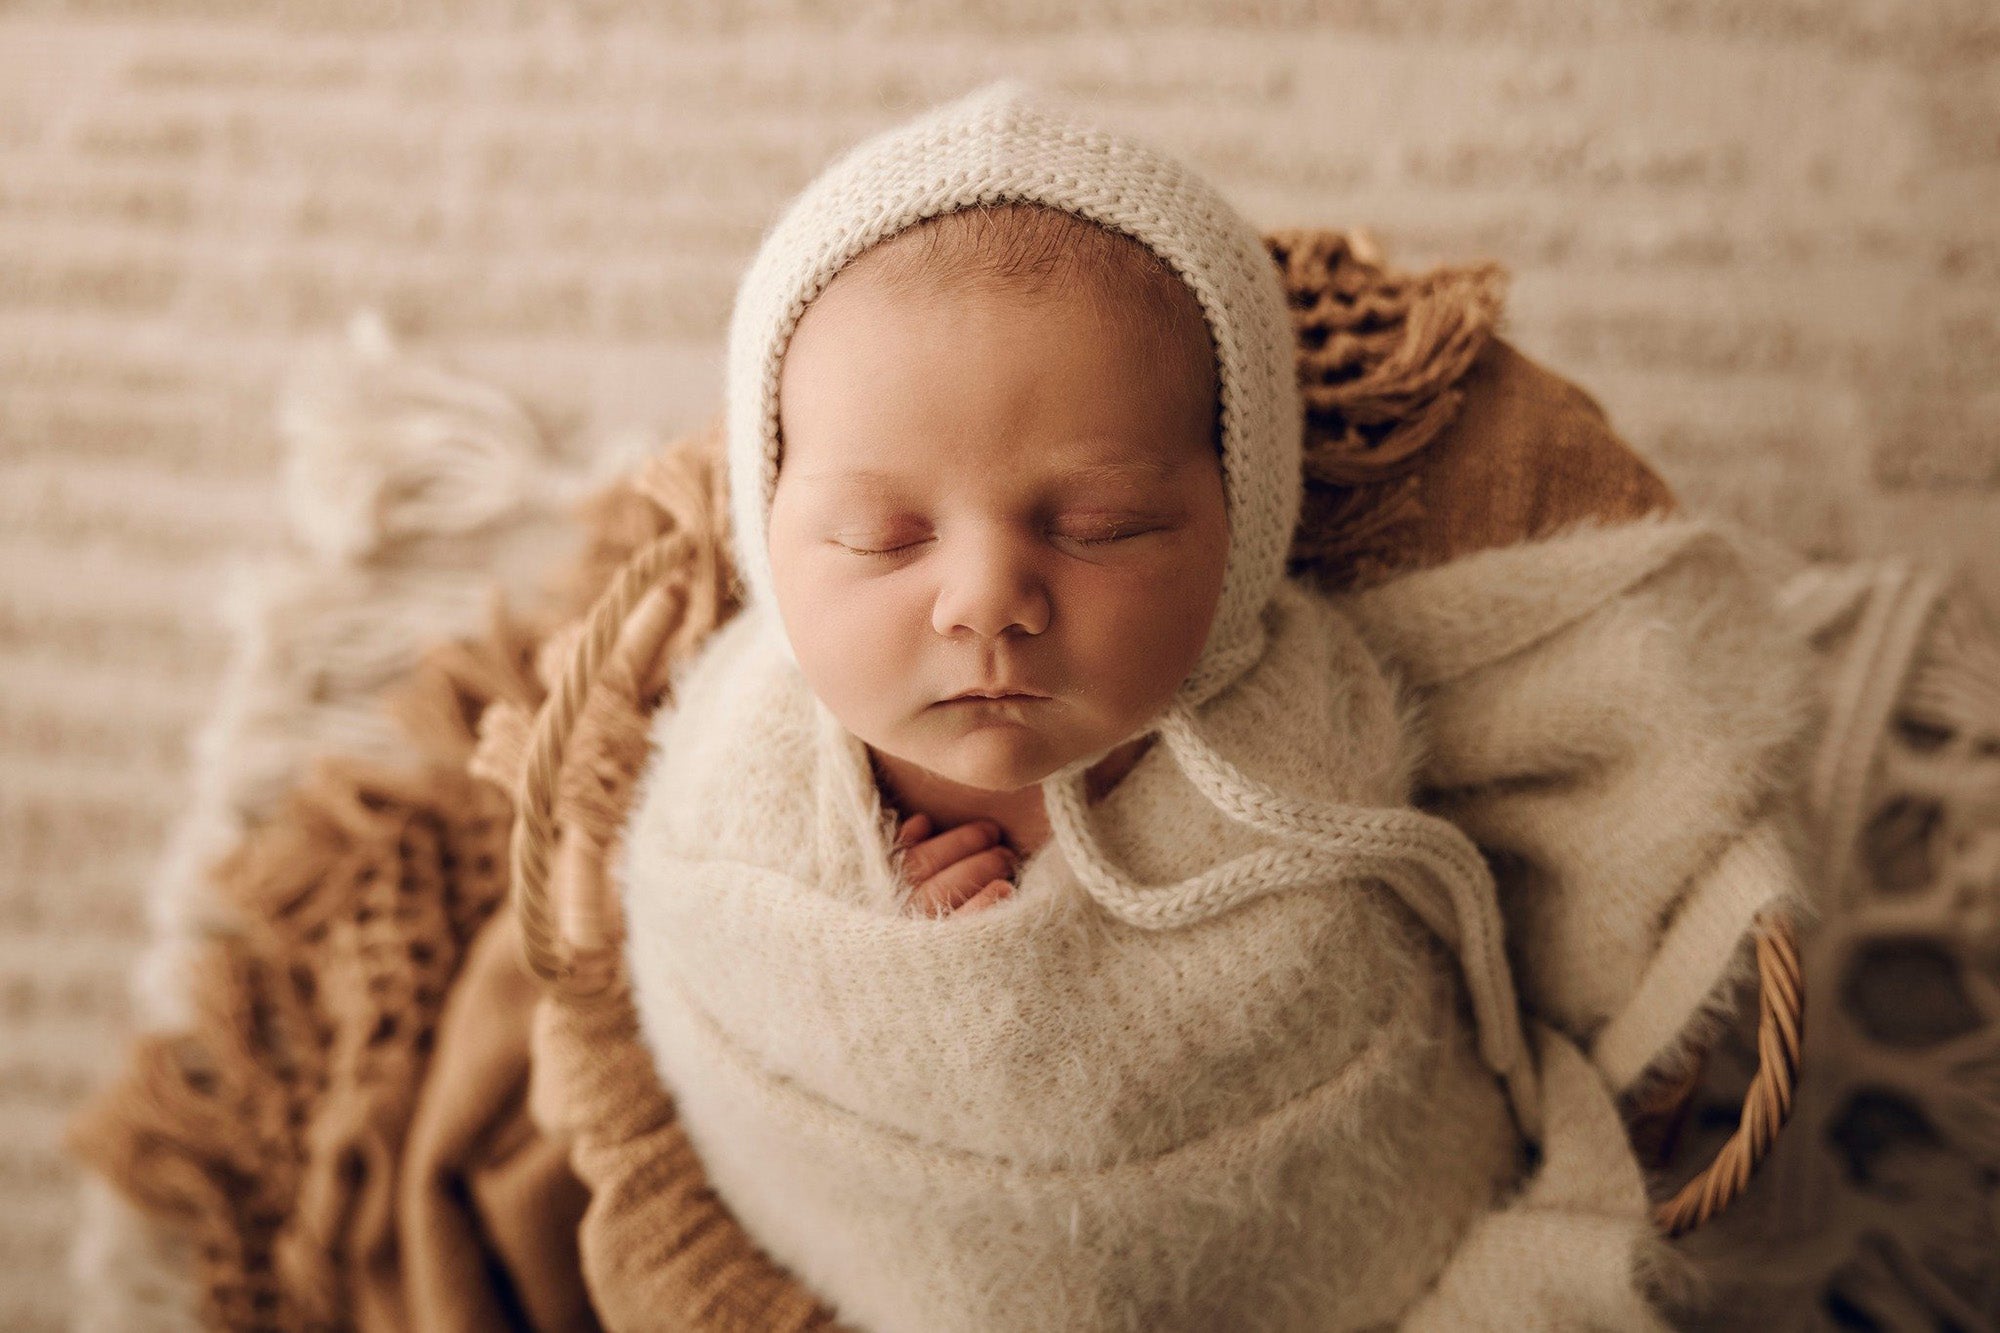 Ultimate Cashmere Wraps - Newborn Photography Props - Princess & the Pea Props